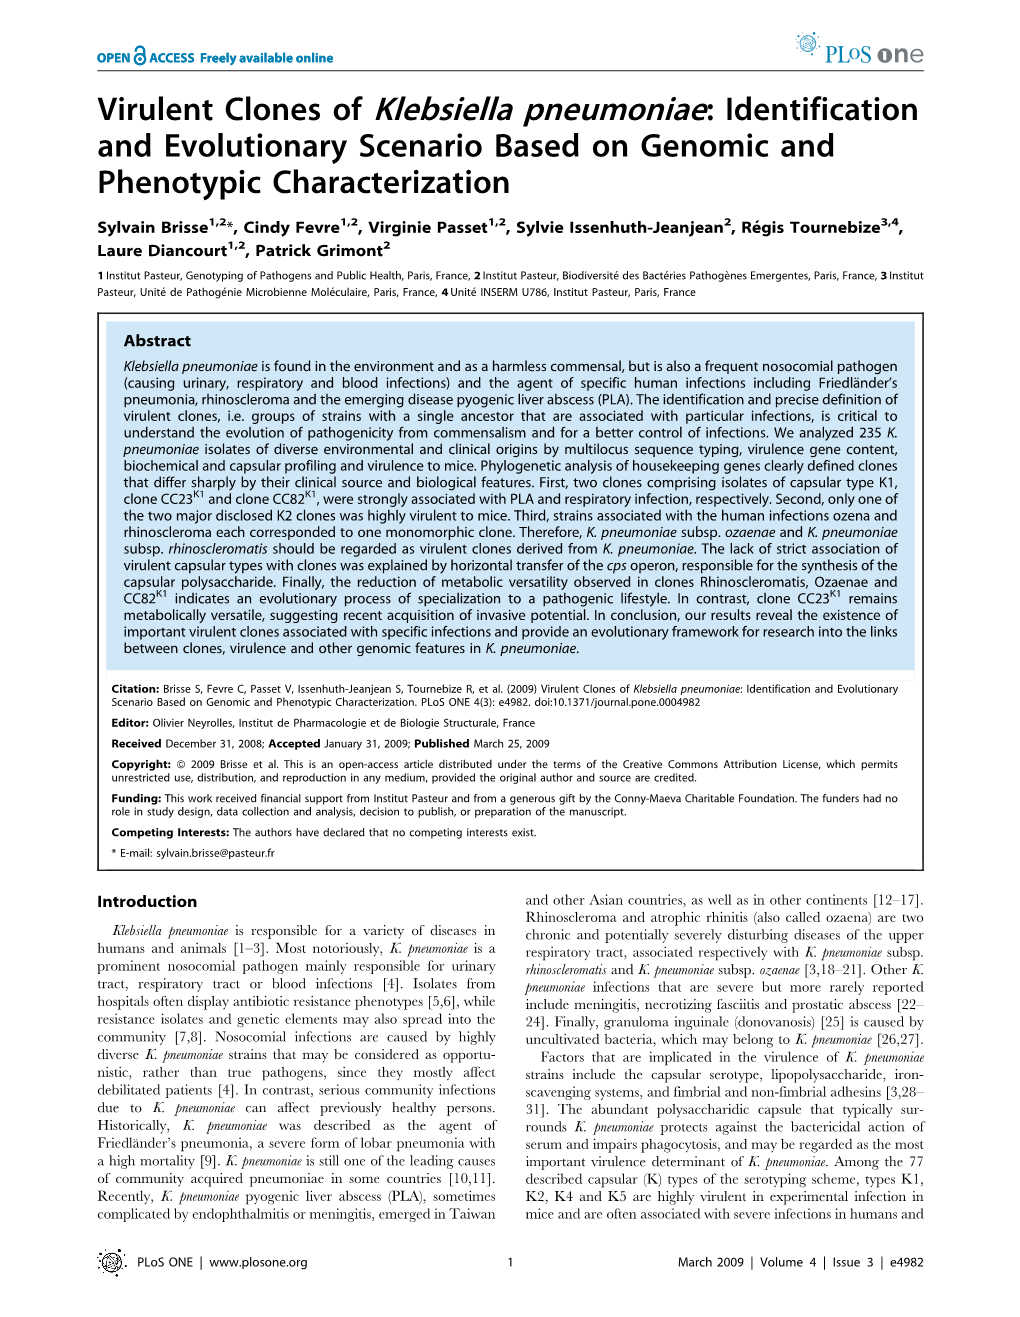 Virulent Clones of Klebsiella Pneumoniae: Identification and Evolutionary Scenario Based on Genomic and Phenotypic Characterization